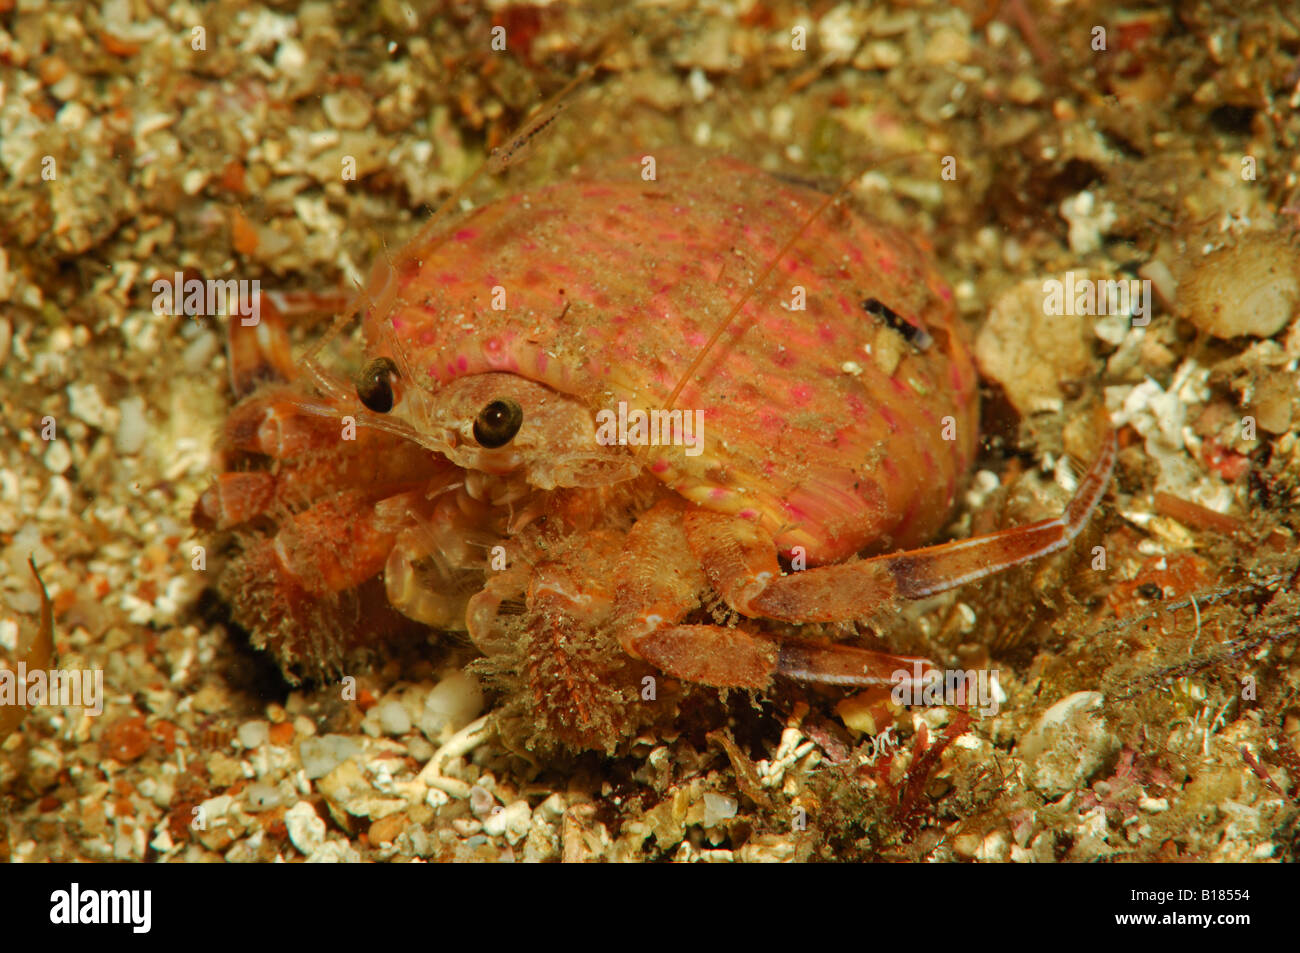 Hermit Crab in Symbiosis with Cloake Anemone Pagurus prideaux Adamsia paliata Grk Bay Susac Island Adriatic Sea Stock Photo